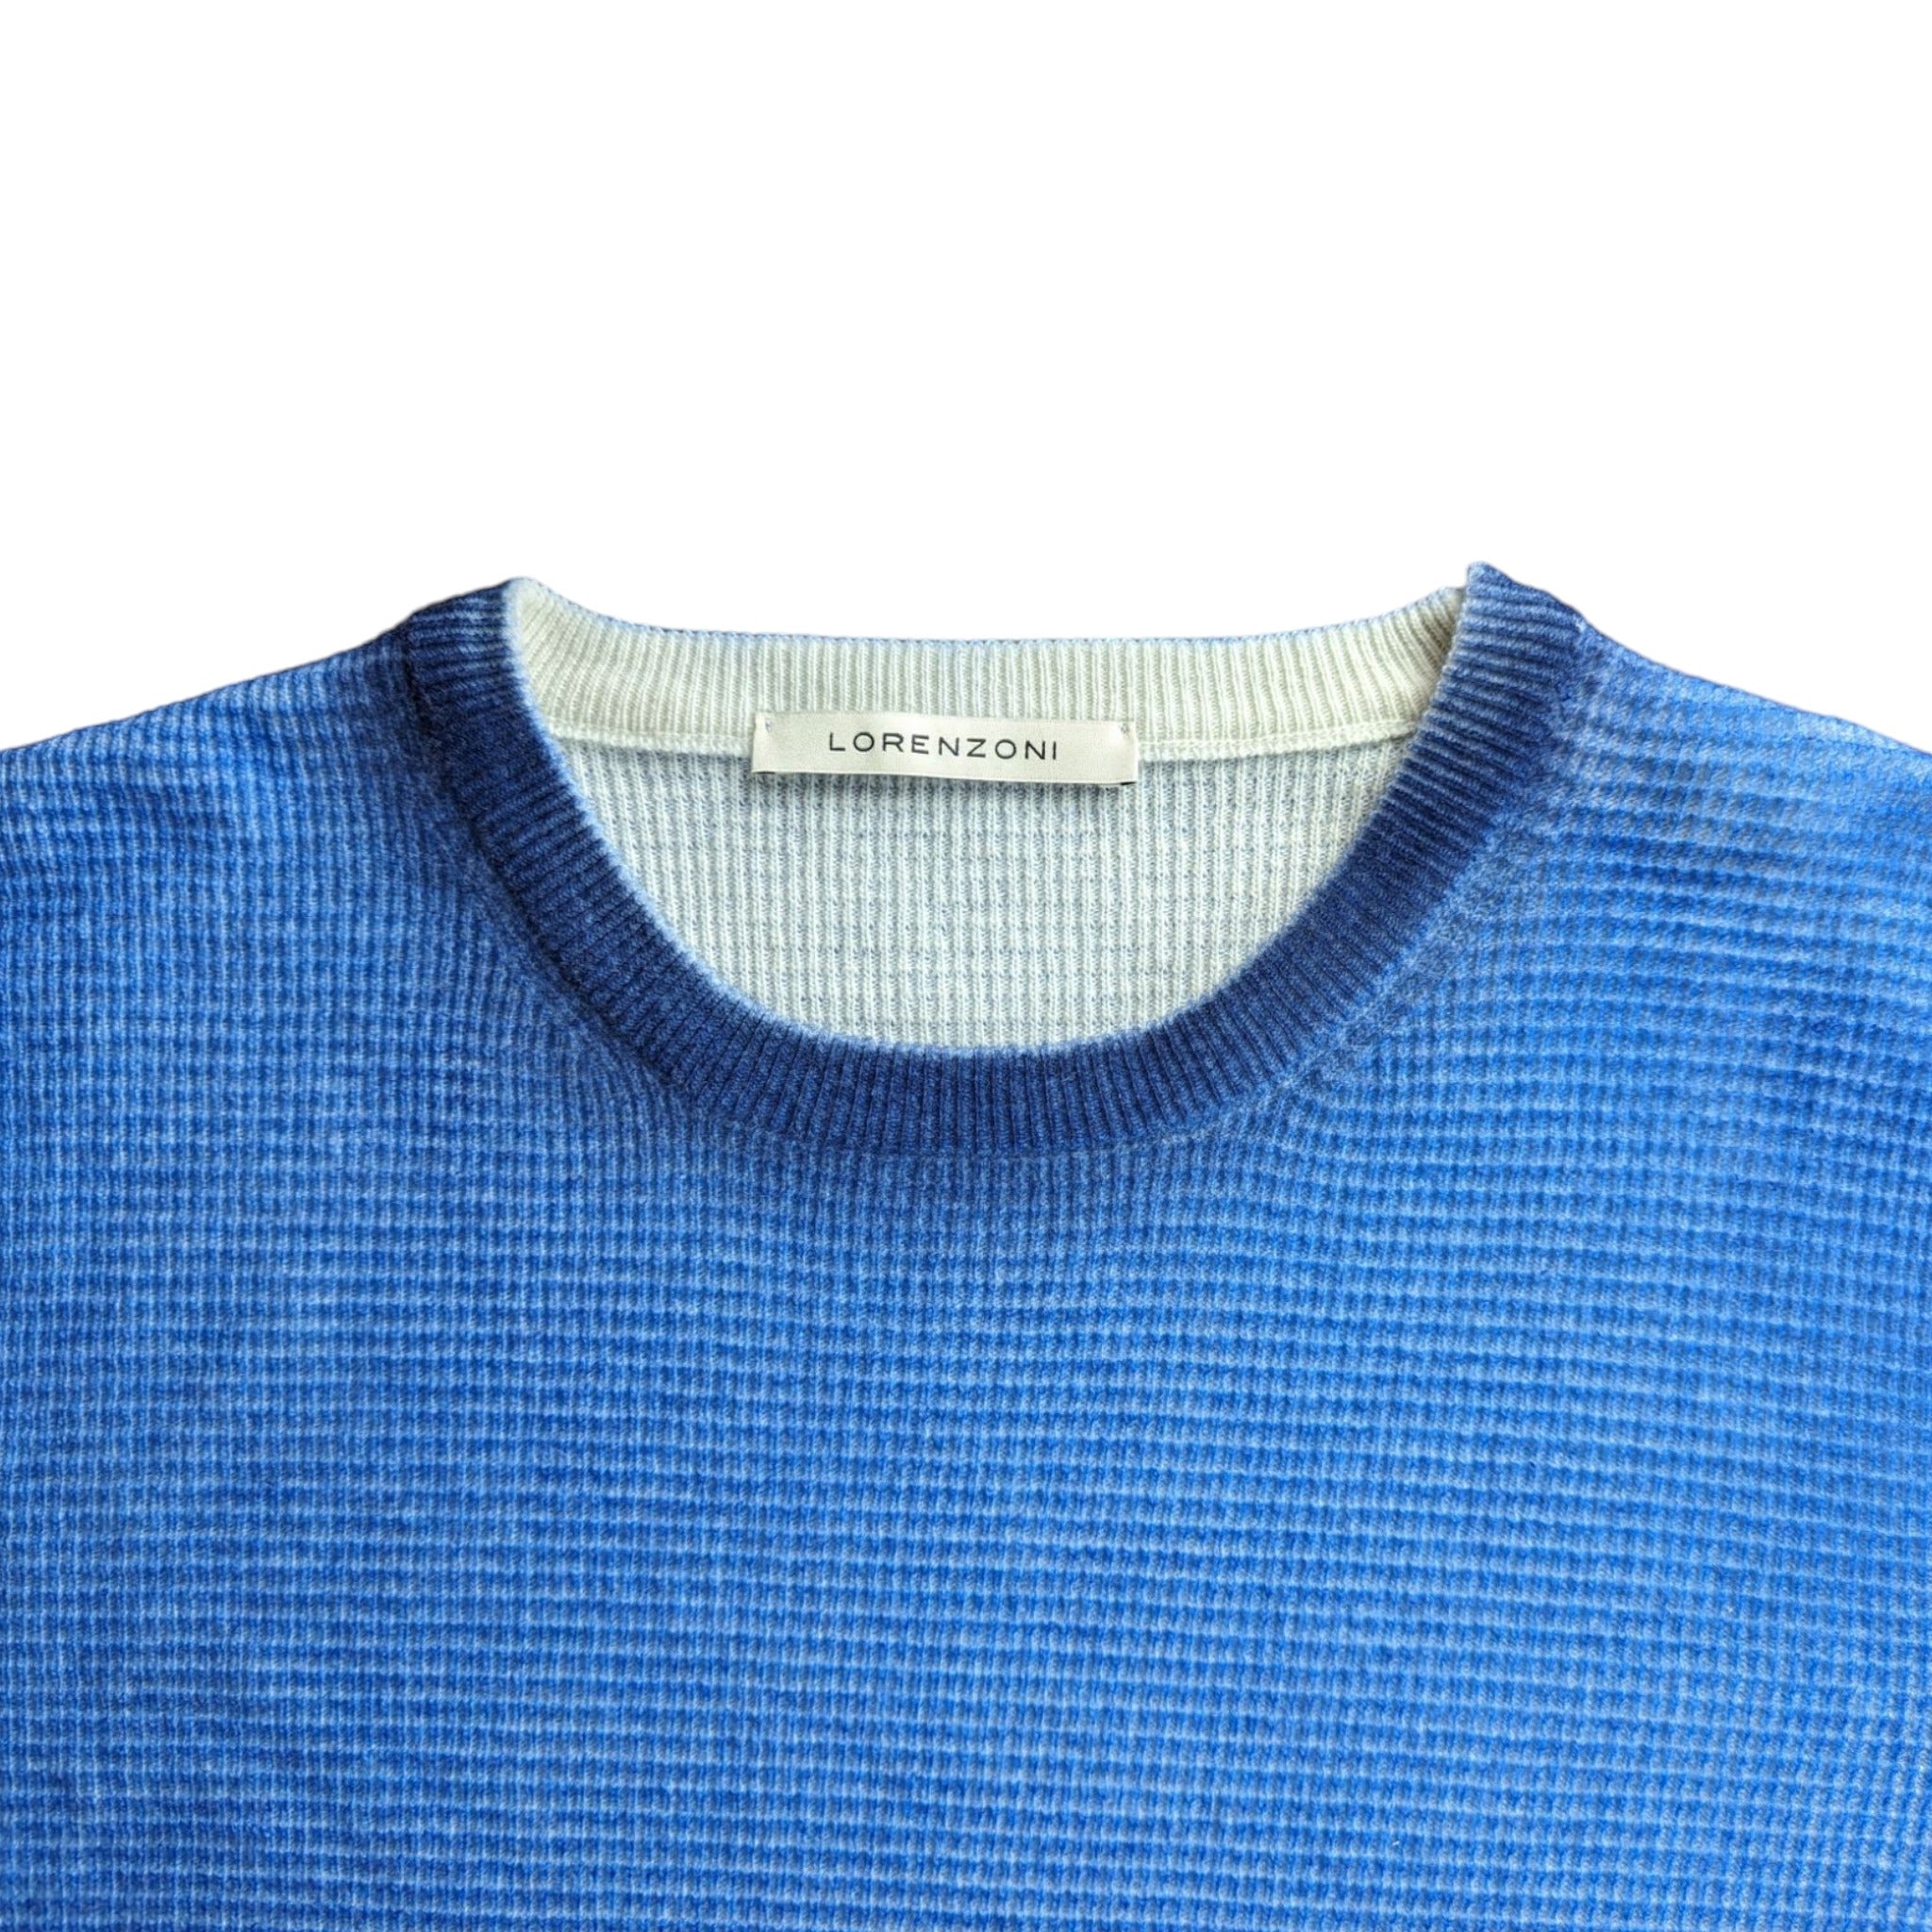 Lorenzoni Sweater Dégradé